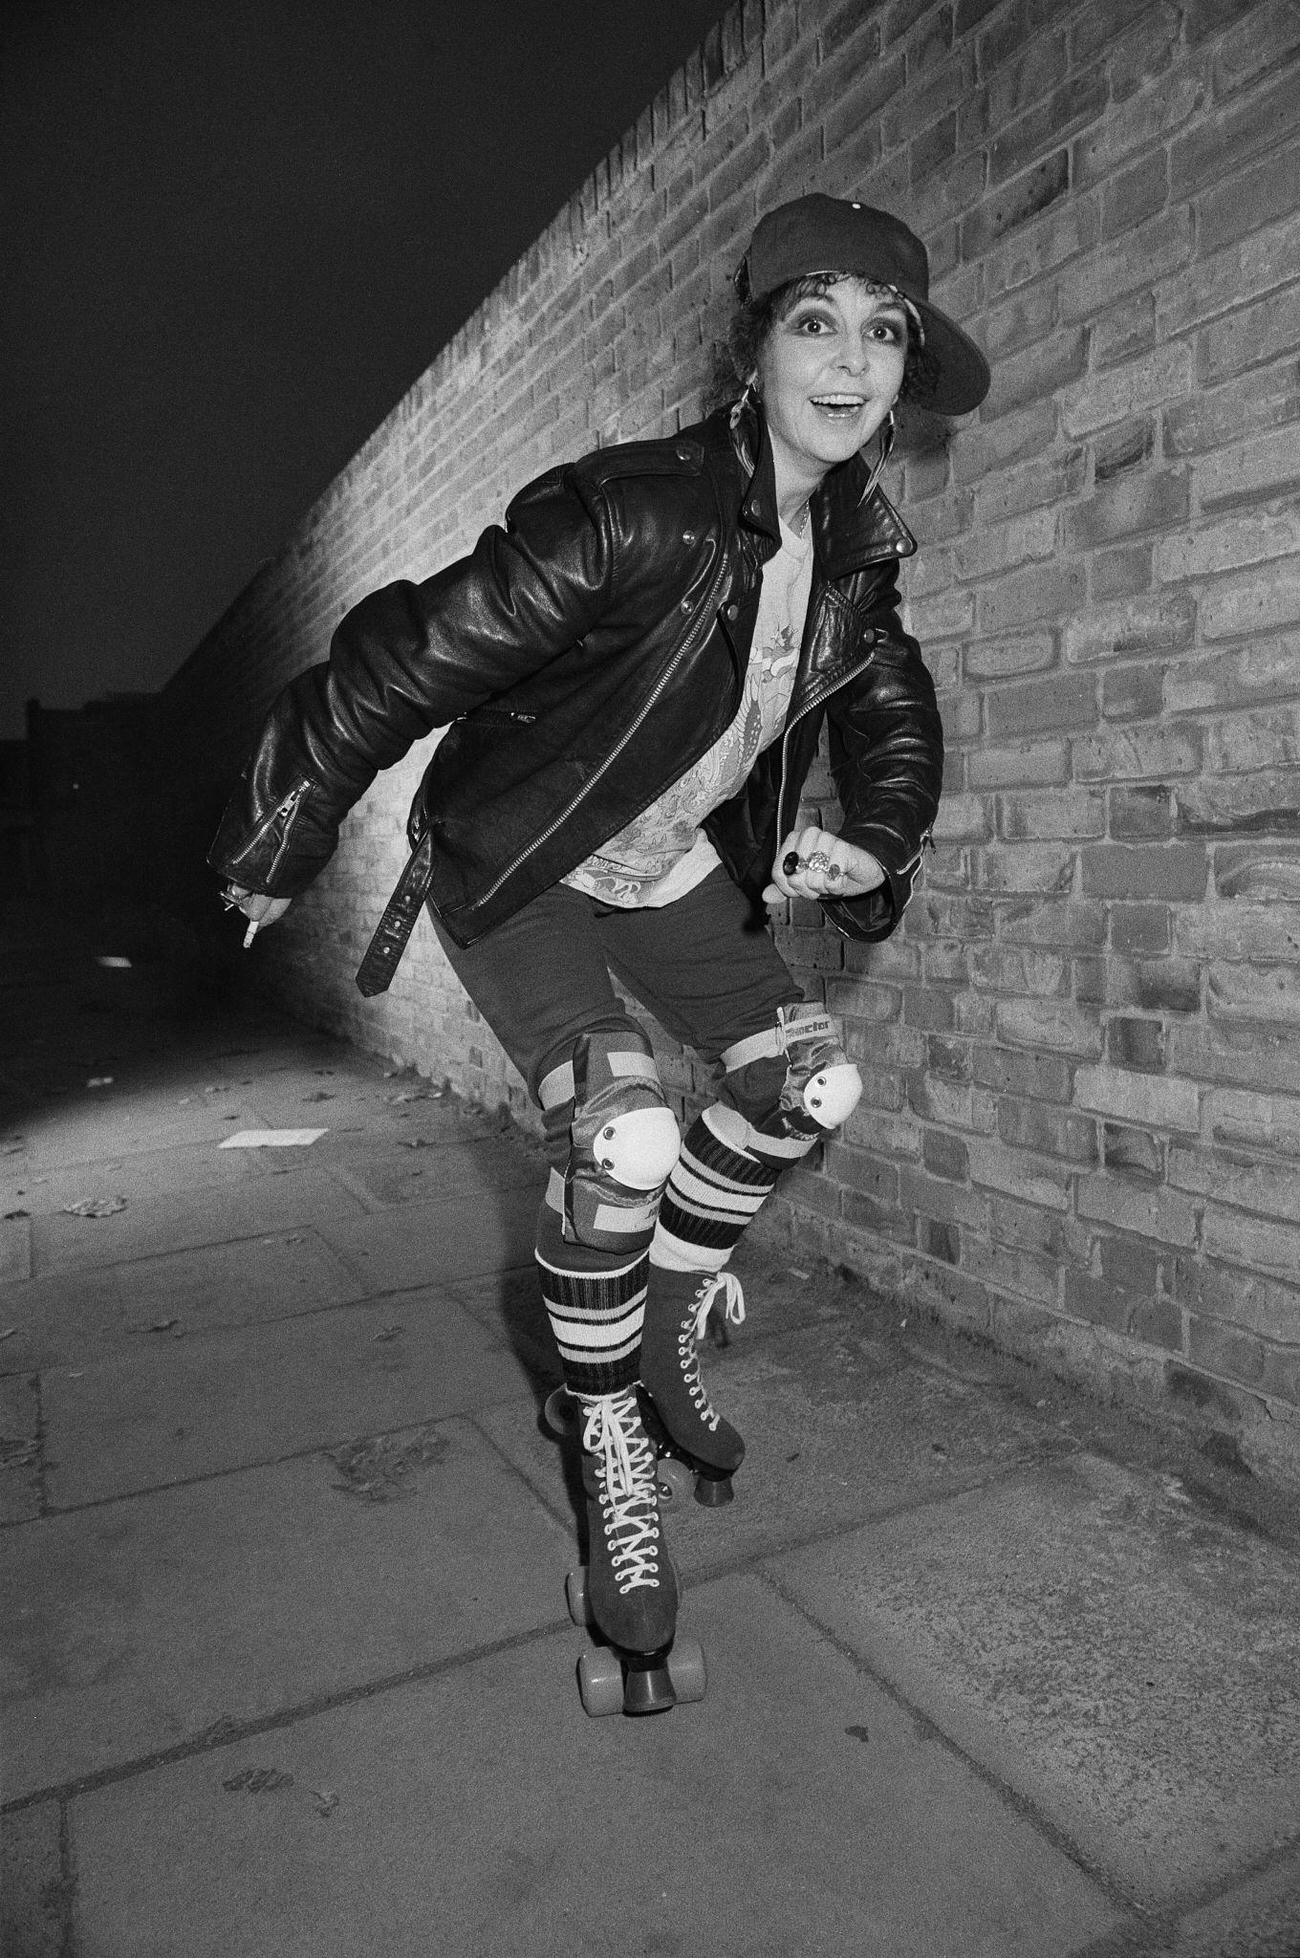 Lynn Seymour, Canadian Ballerina, on Roller Skates in London, 1975